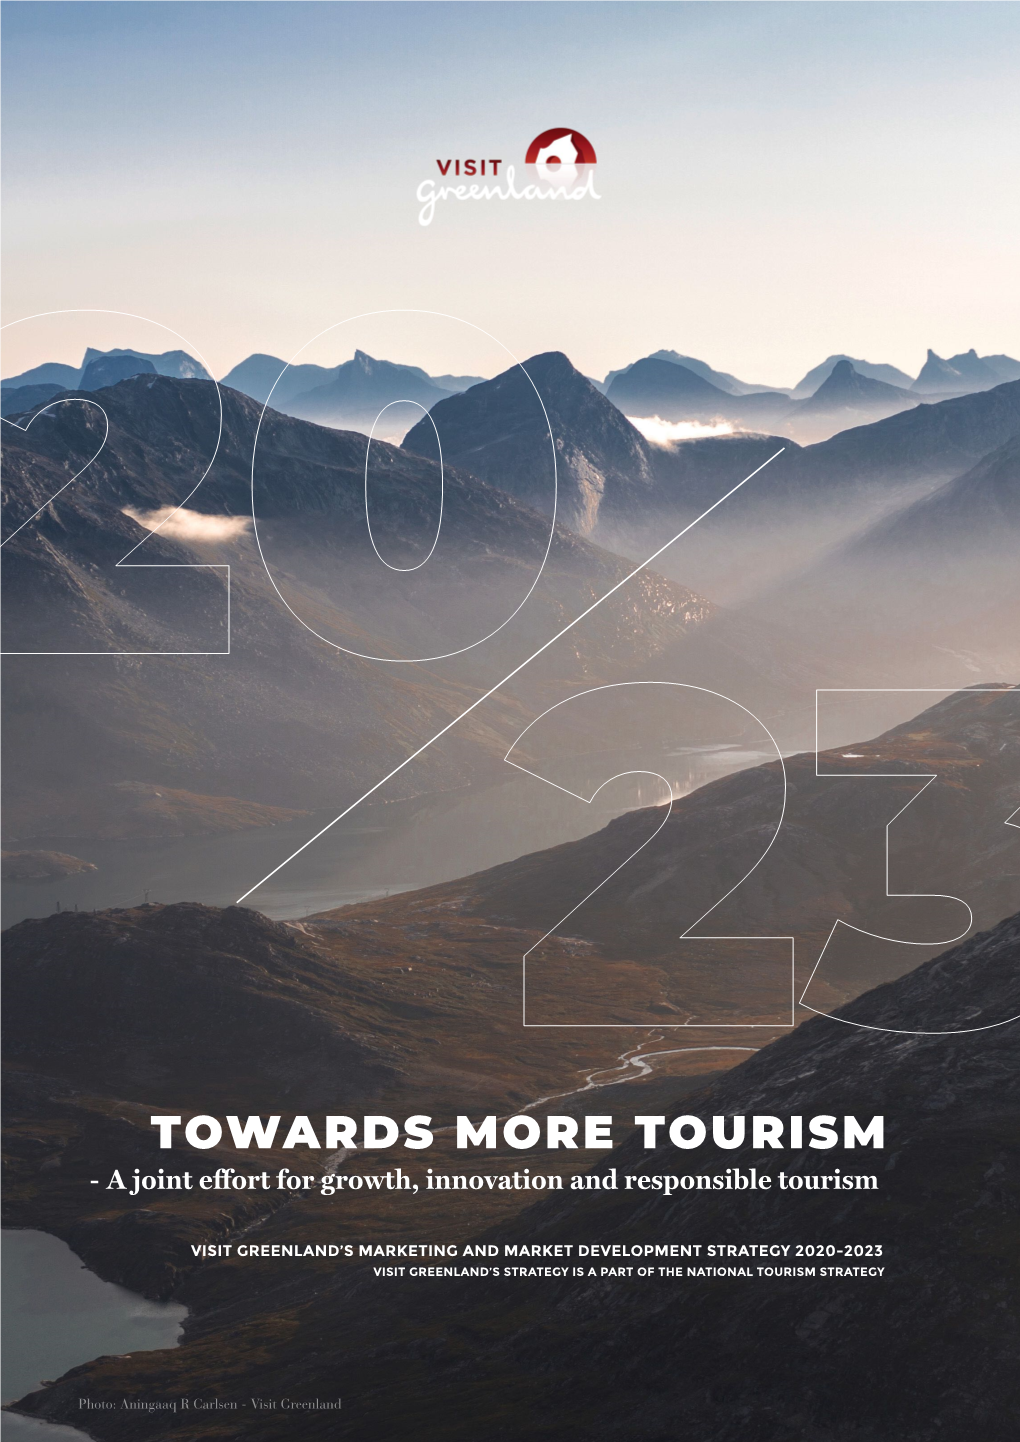 Tourism Strategy